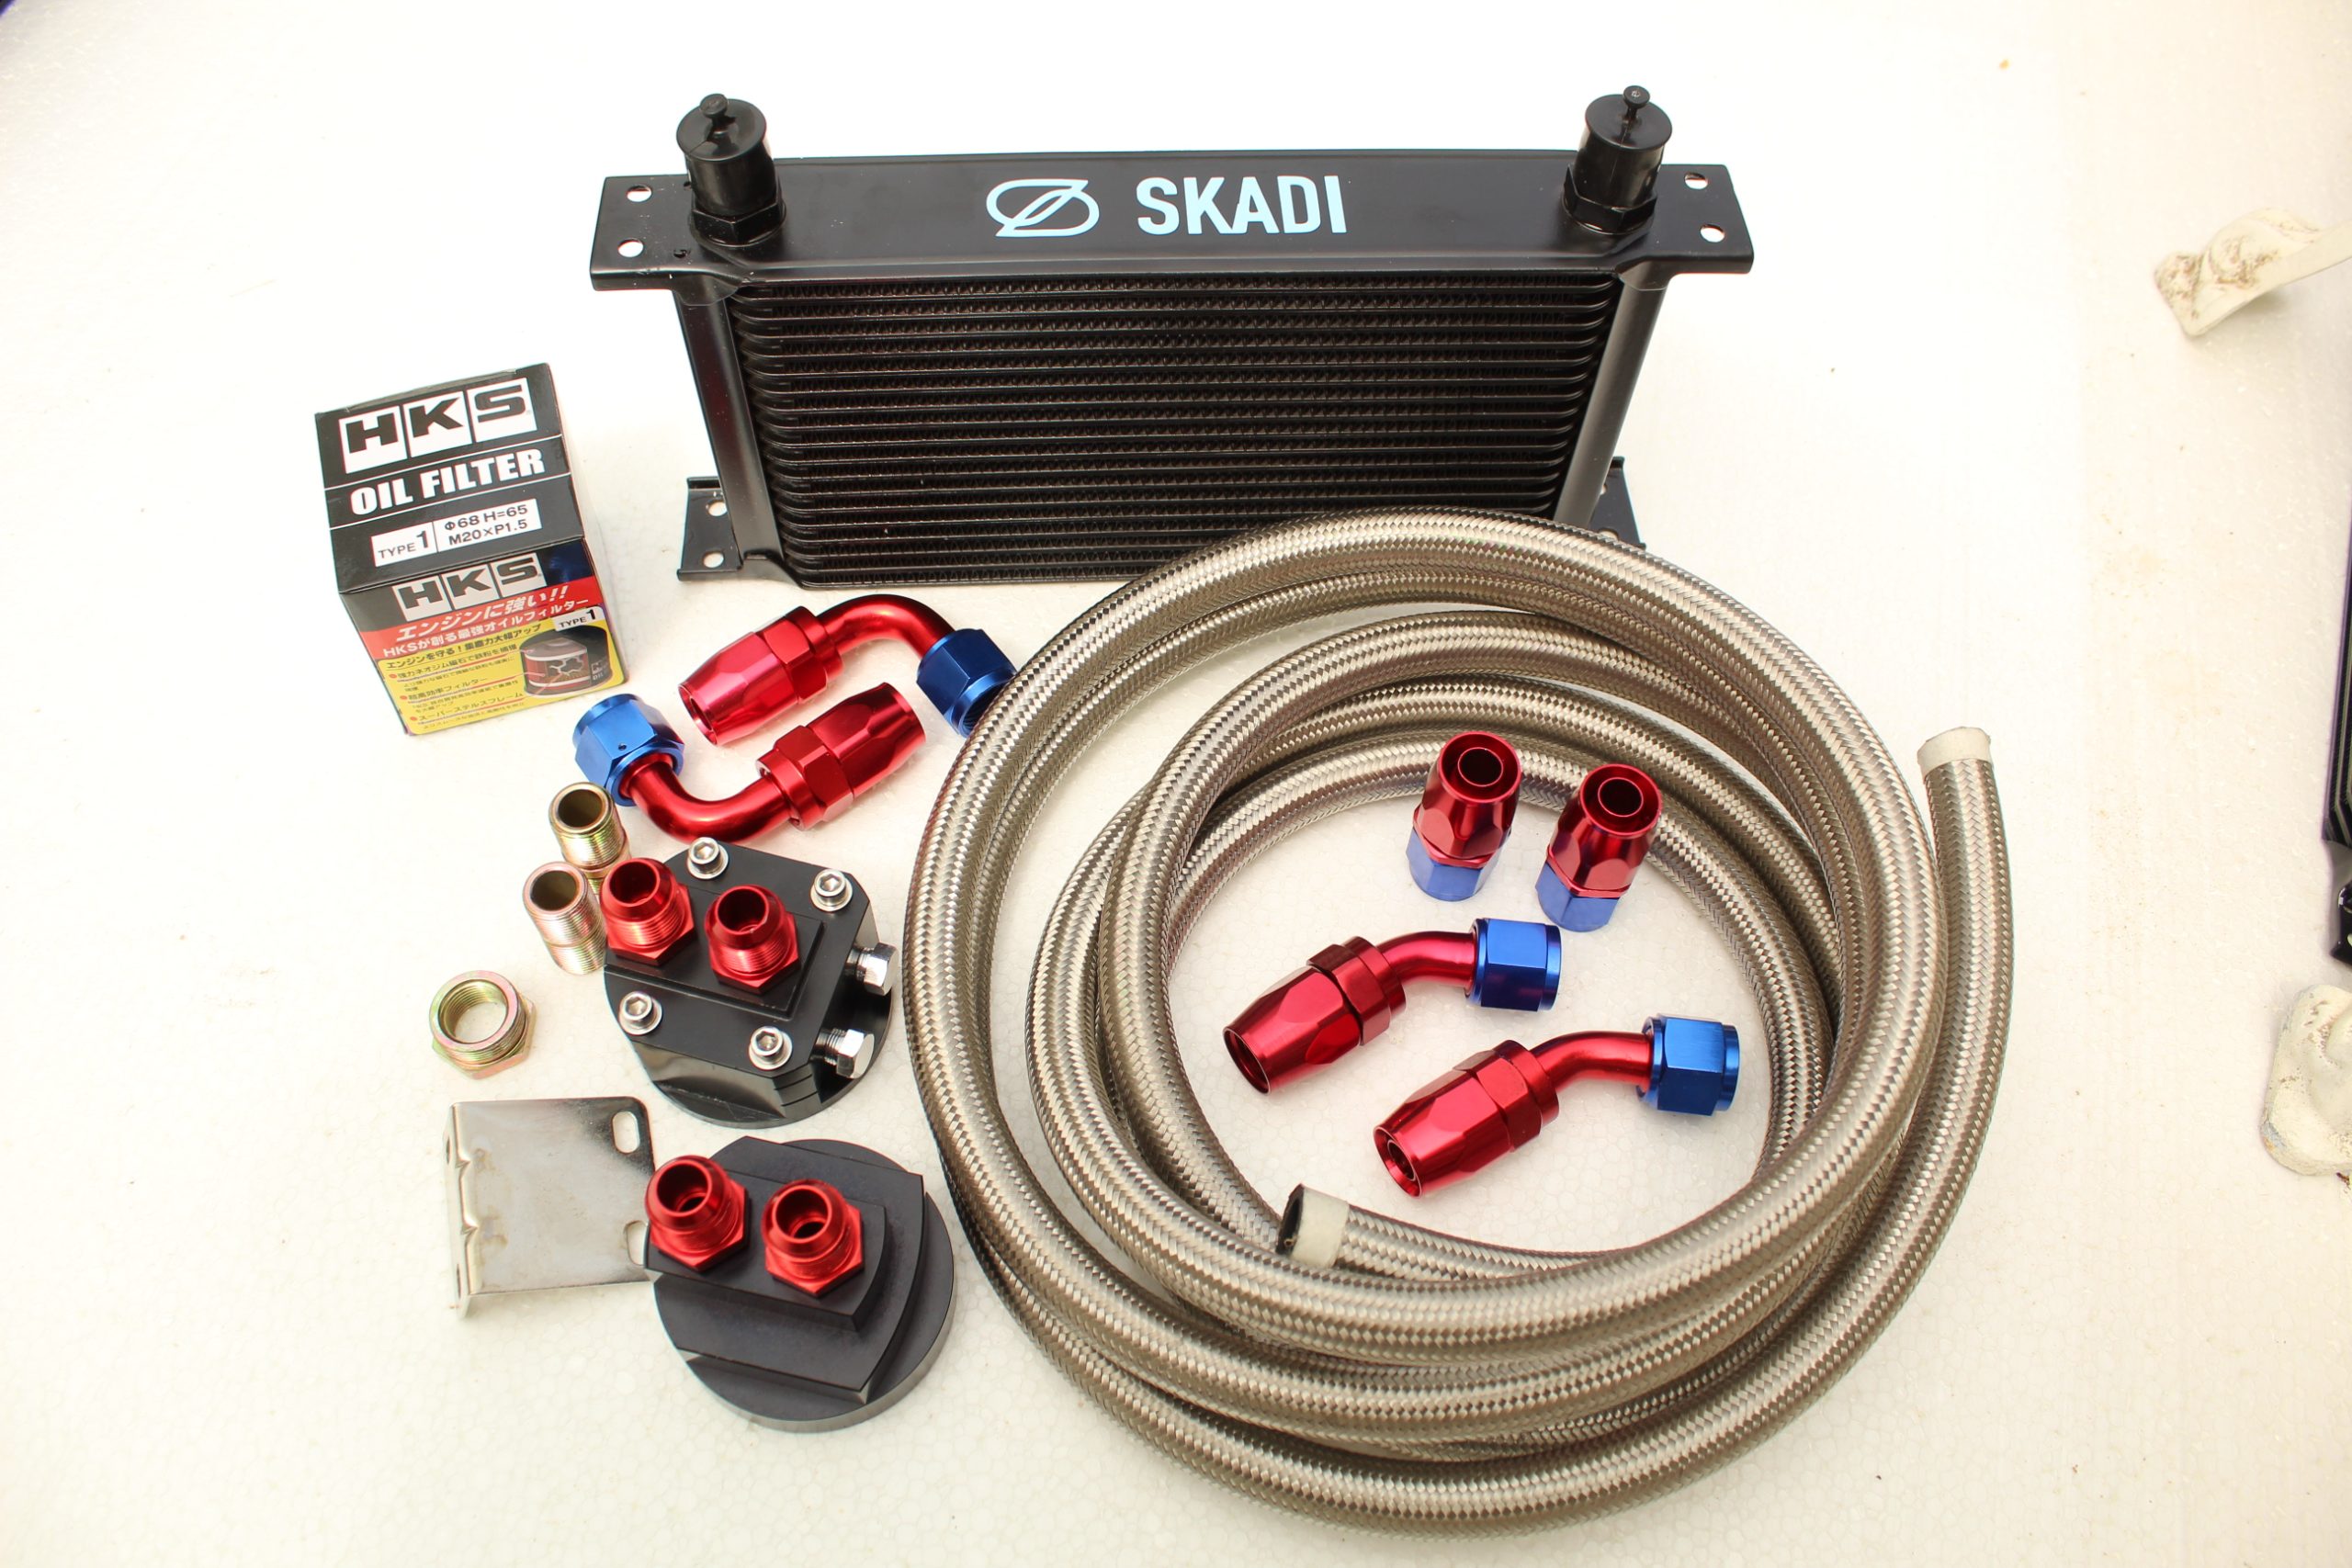 19 Row Oil Filter Relocation Kit + HKS Filter for Subaru Impreza WRX/STi All EJ20/25 Engines